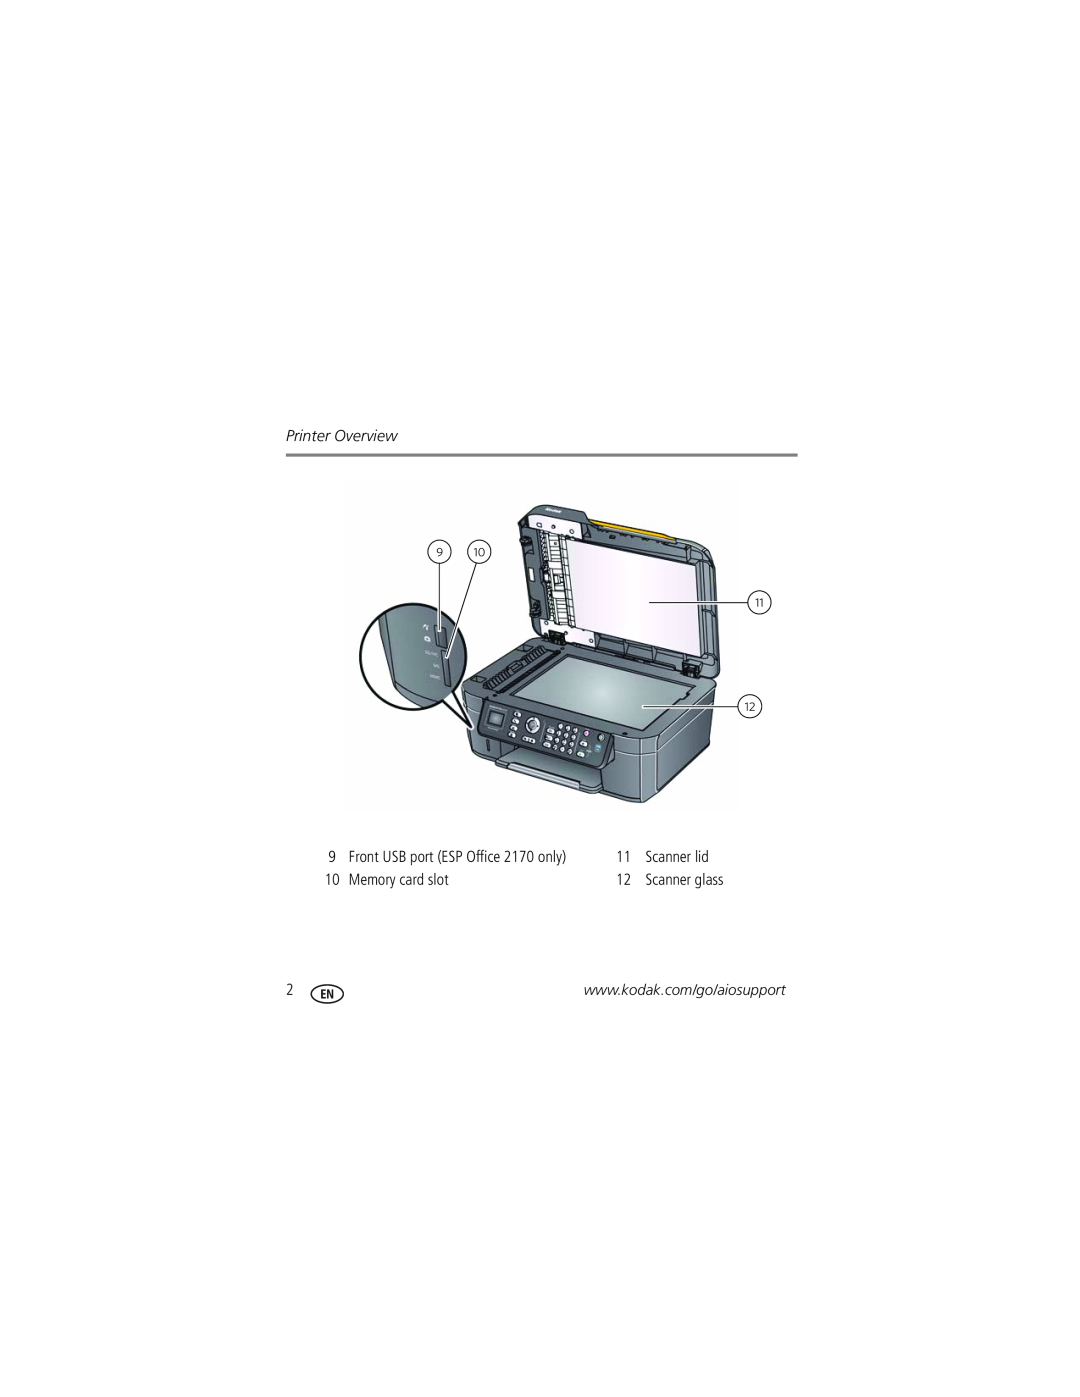 Kodak 2100 manual Printer Overview, Memory card slot, Scanner lid, Front USB port ESP Office 2170 only 